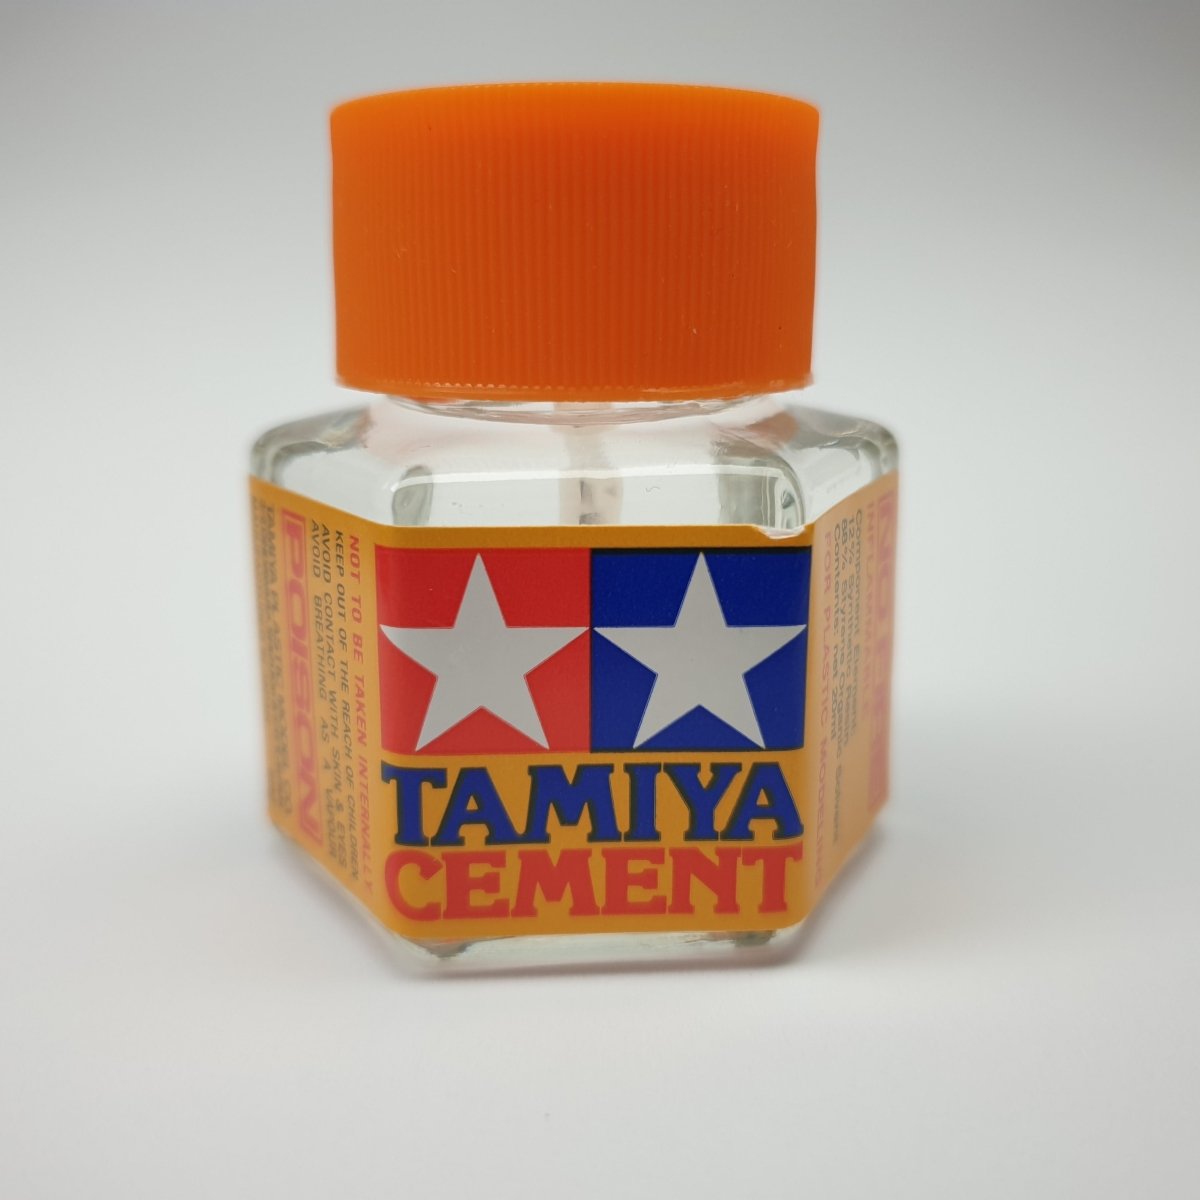 Tamiya Cement w/Brush 20ml 87012 - GPmodeling